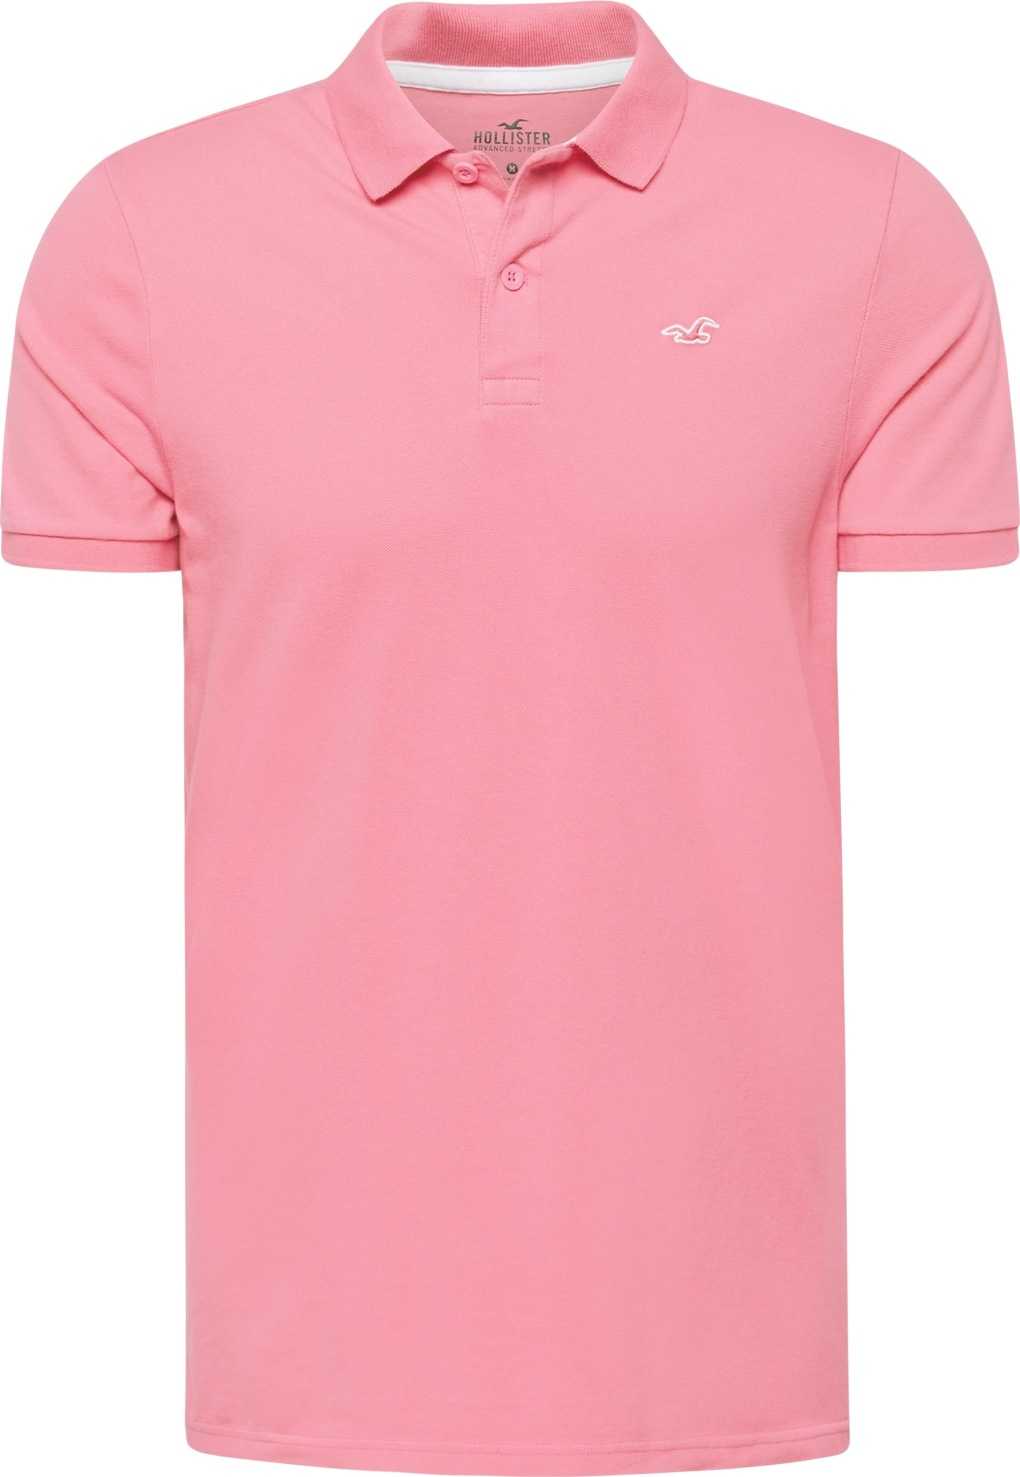 HOLLISTER Tričko 'EMEA' světle růžová / bílá